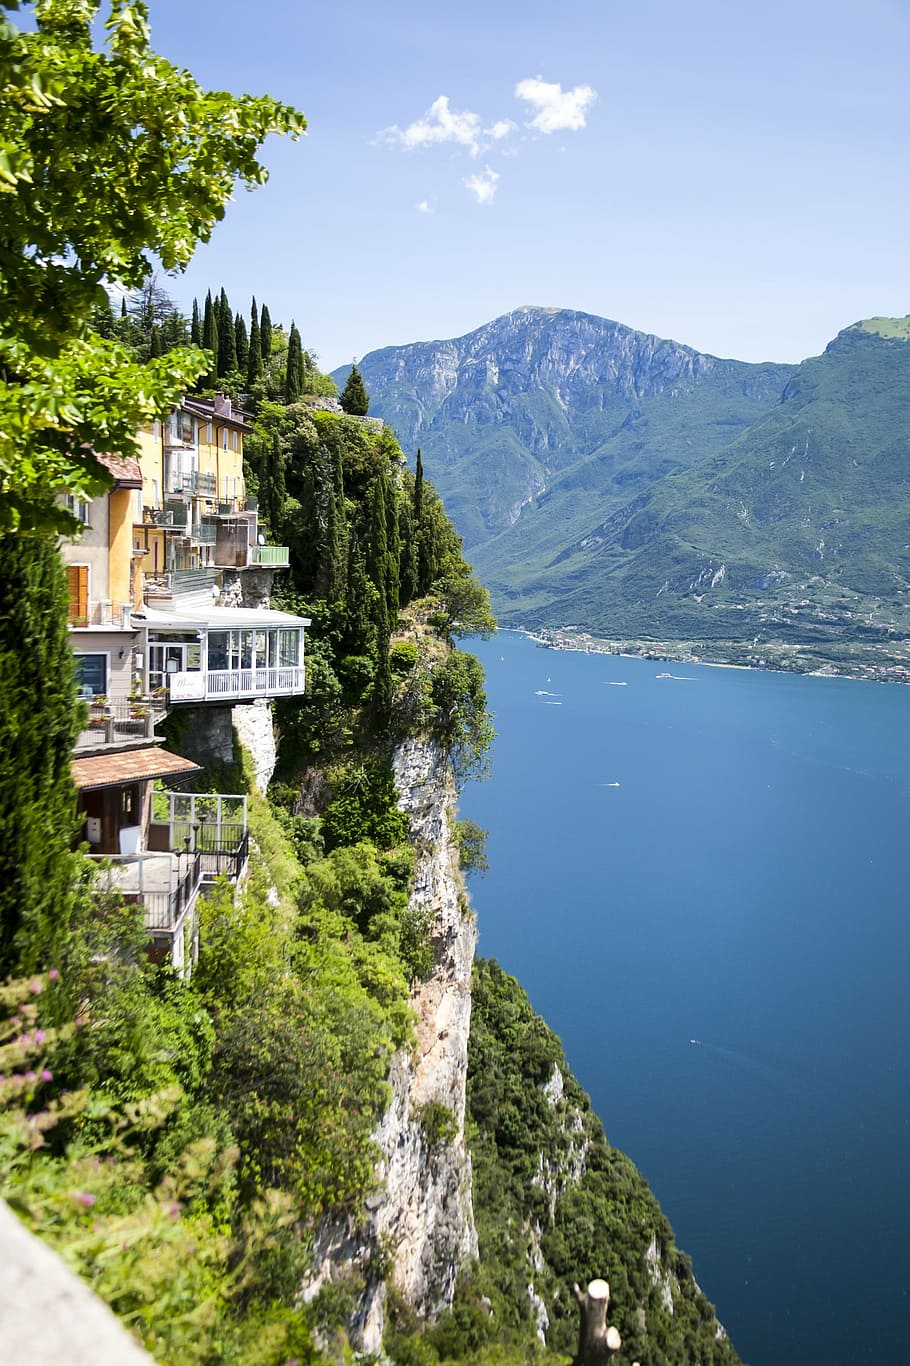 rocha, íngreme, itália, alpino, perspectivas, montanha, agua, paisagens - natureza, beleza natural, exterior do edifício